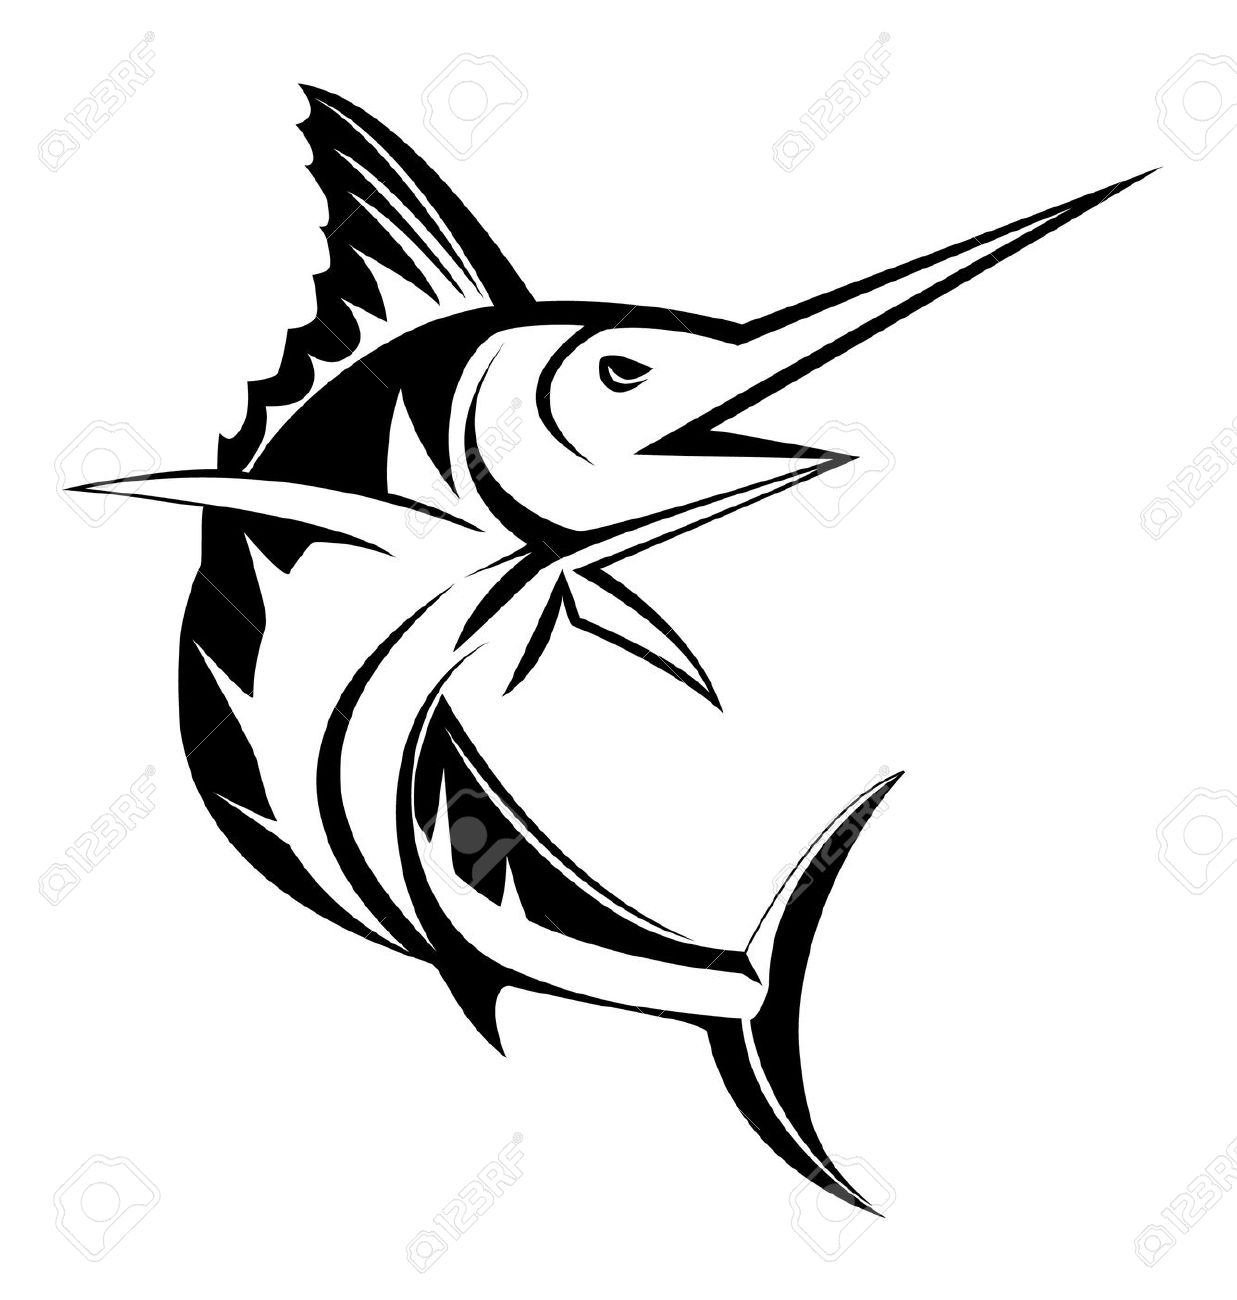 sailfish: Cartoon illustratio